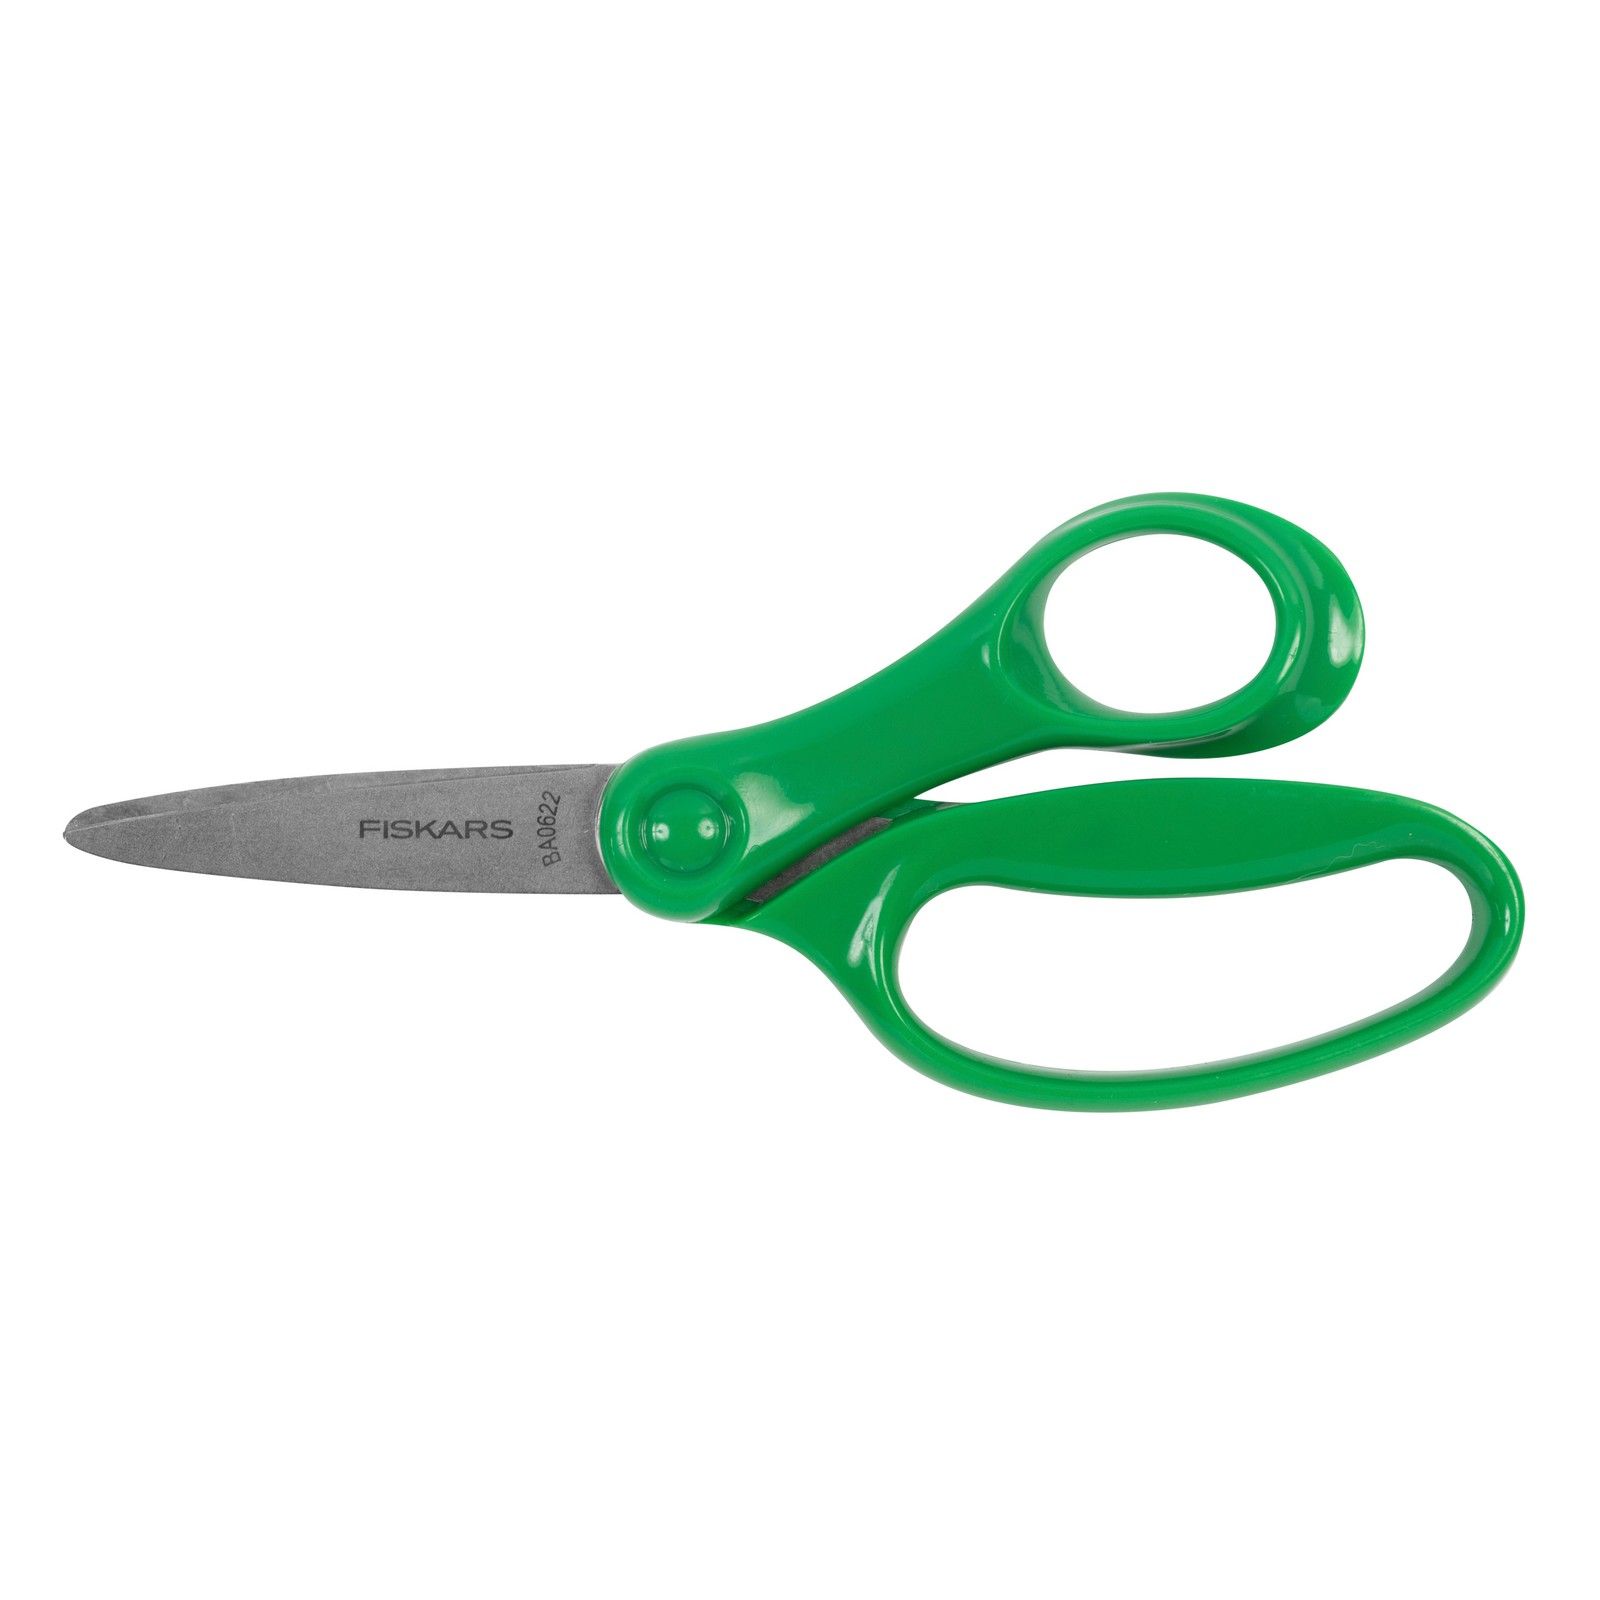 Fiskars • Big kids Scissors Green 15cm for +8 years old